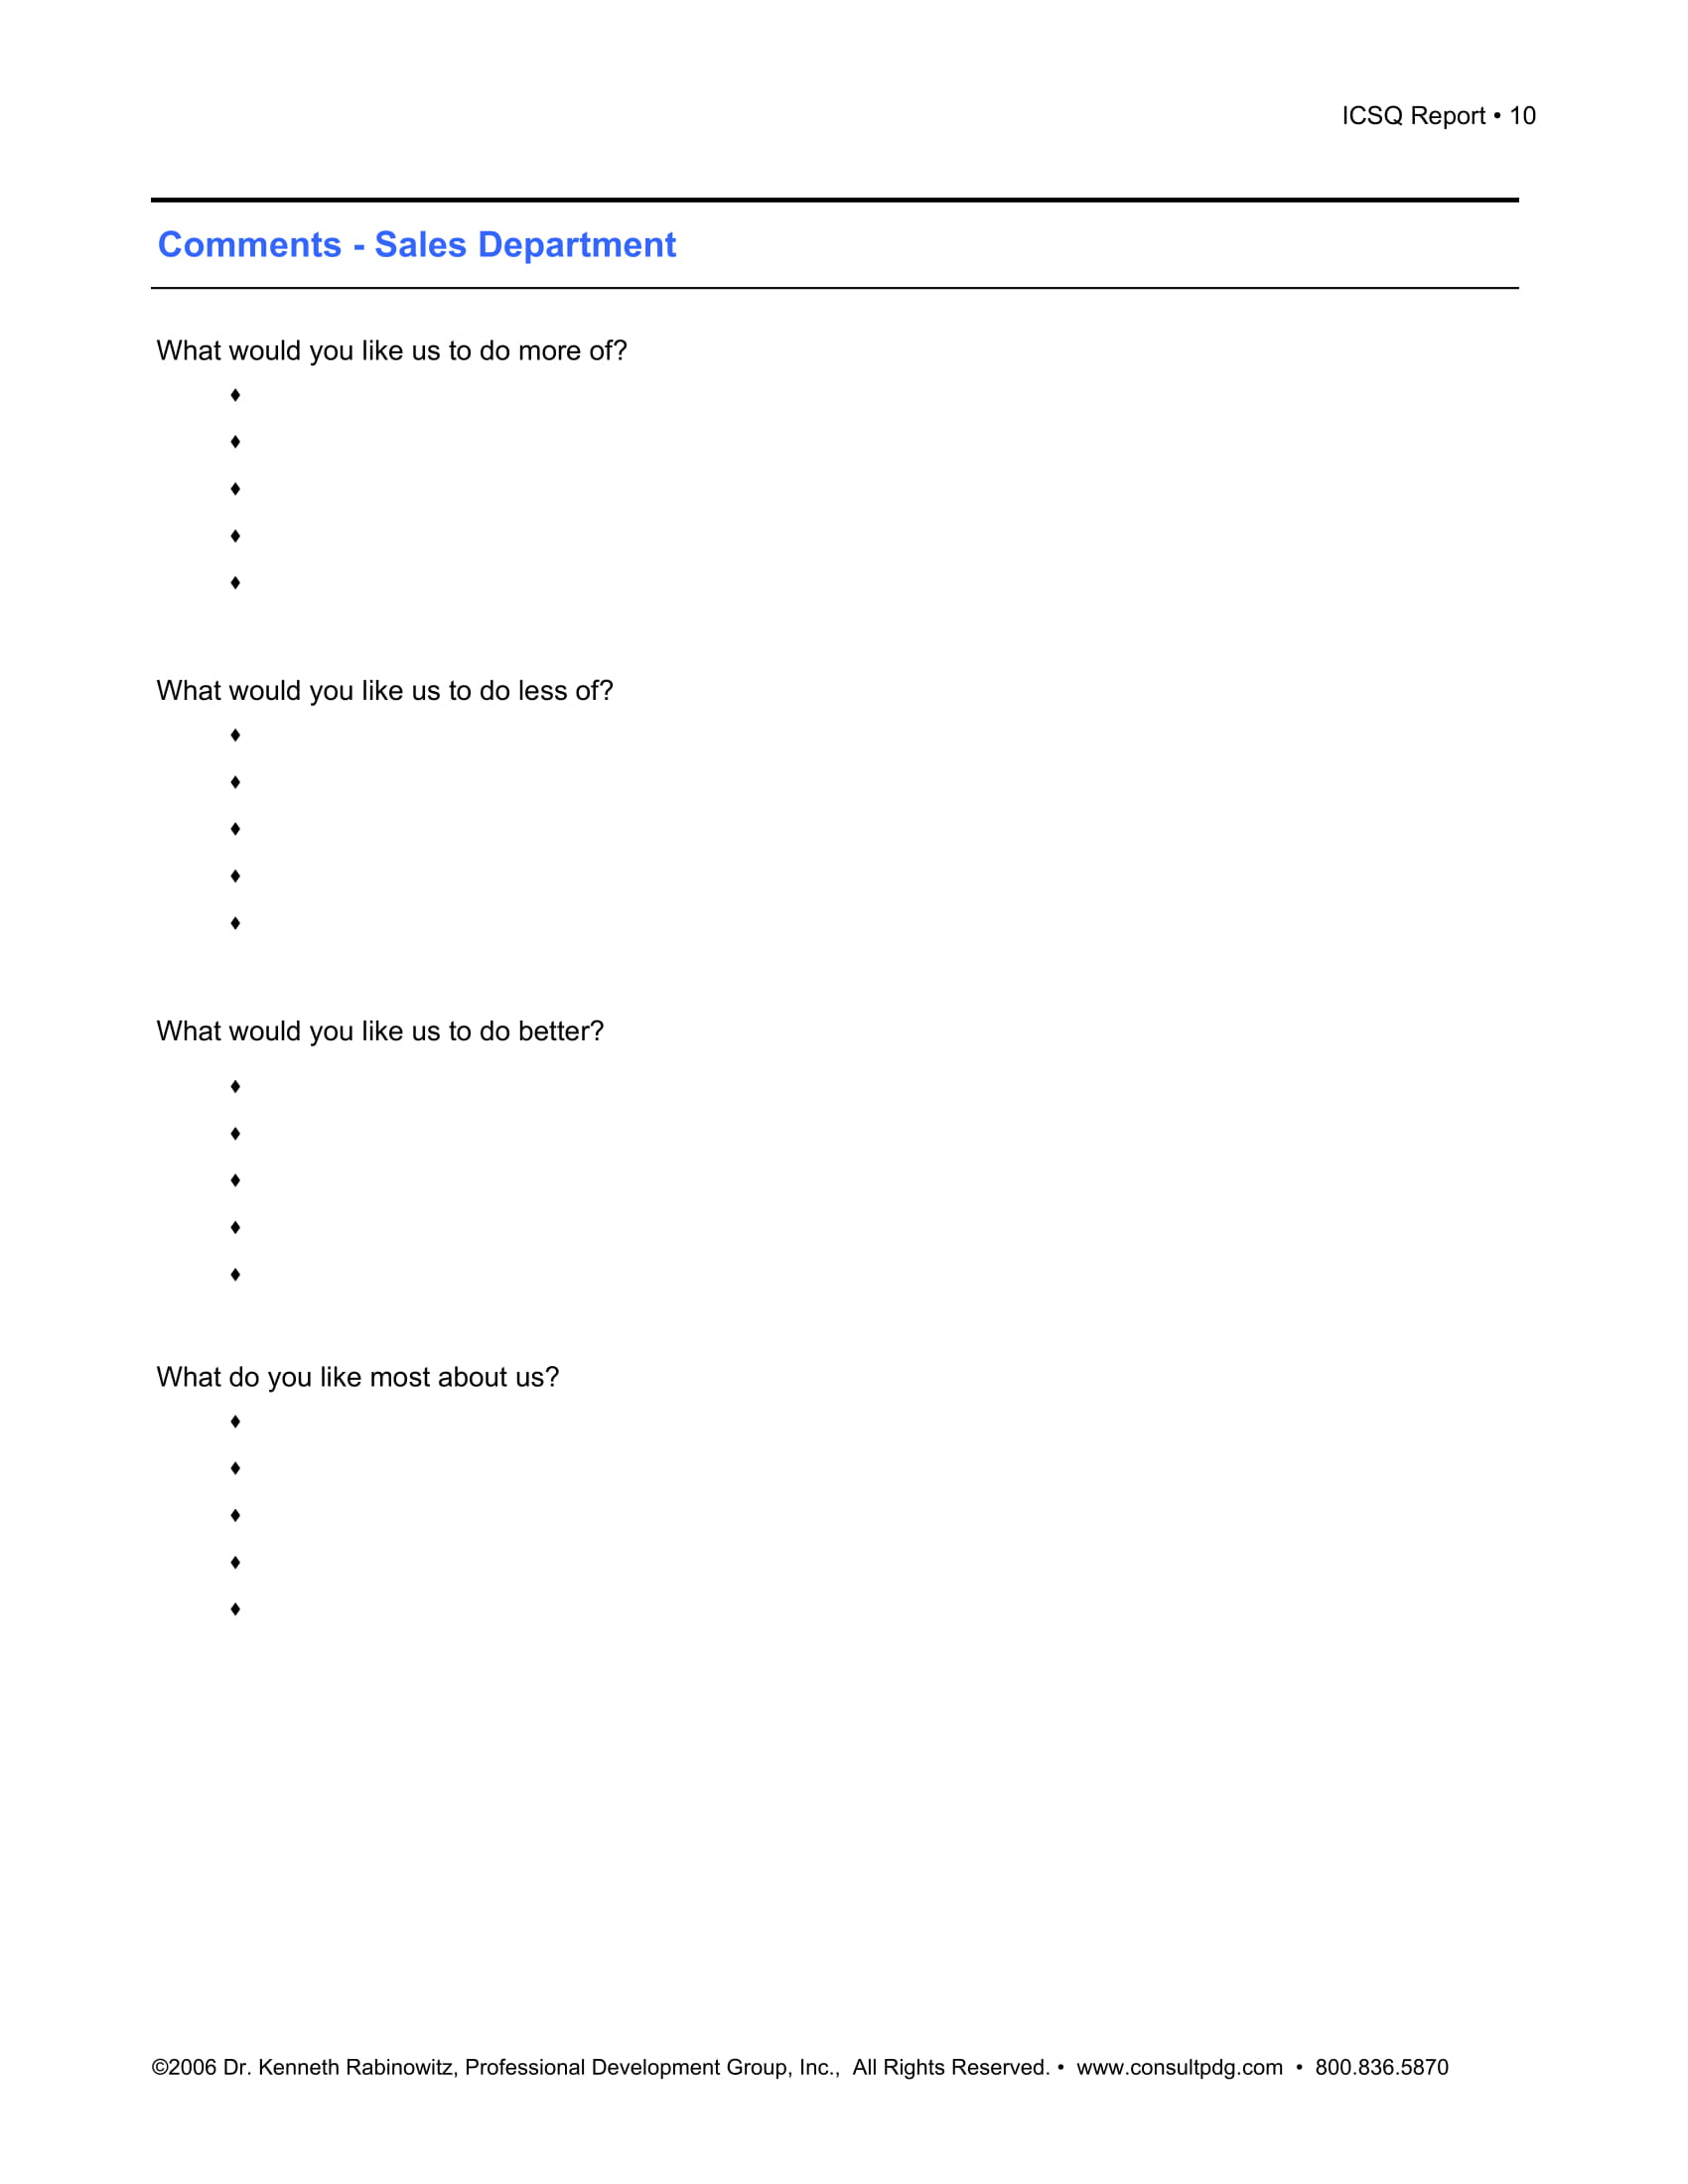 internal customer survey questionnaire example